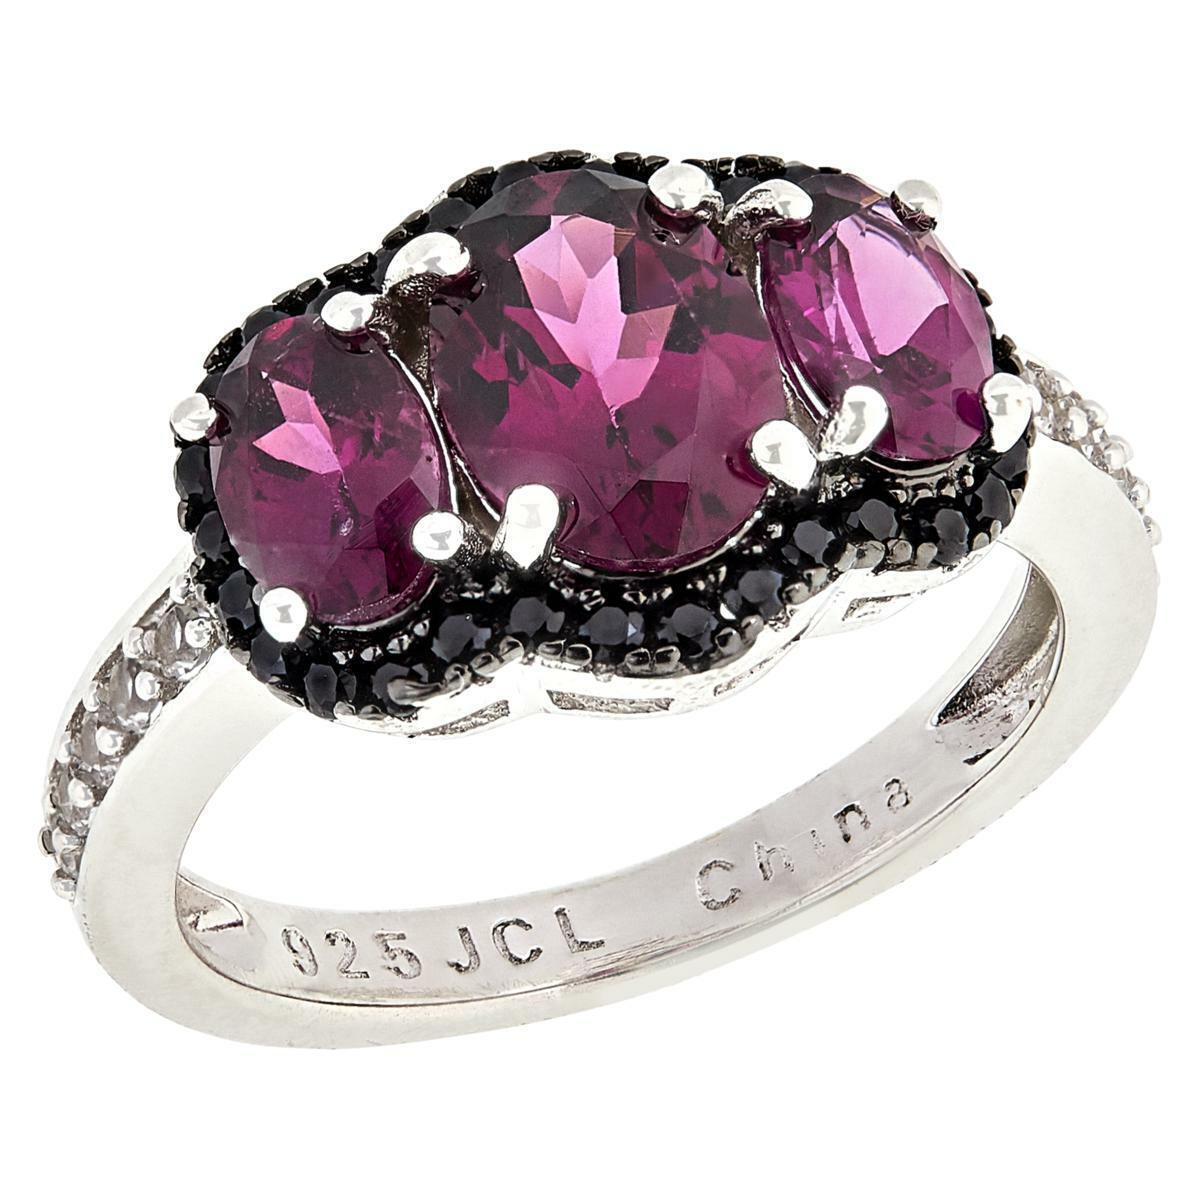 Colleen Lopez Sterling Silver Oval Purple Garnet Gemstone 3 Stone Ring, Size 7